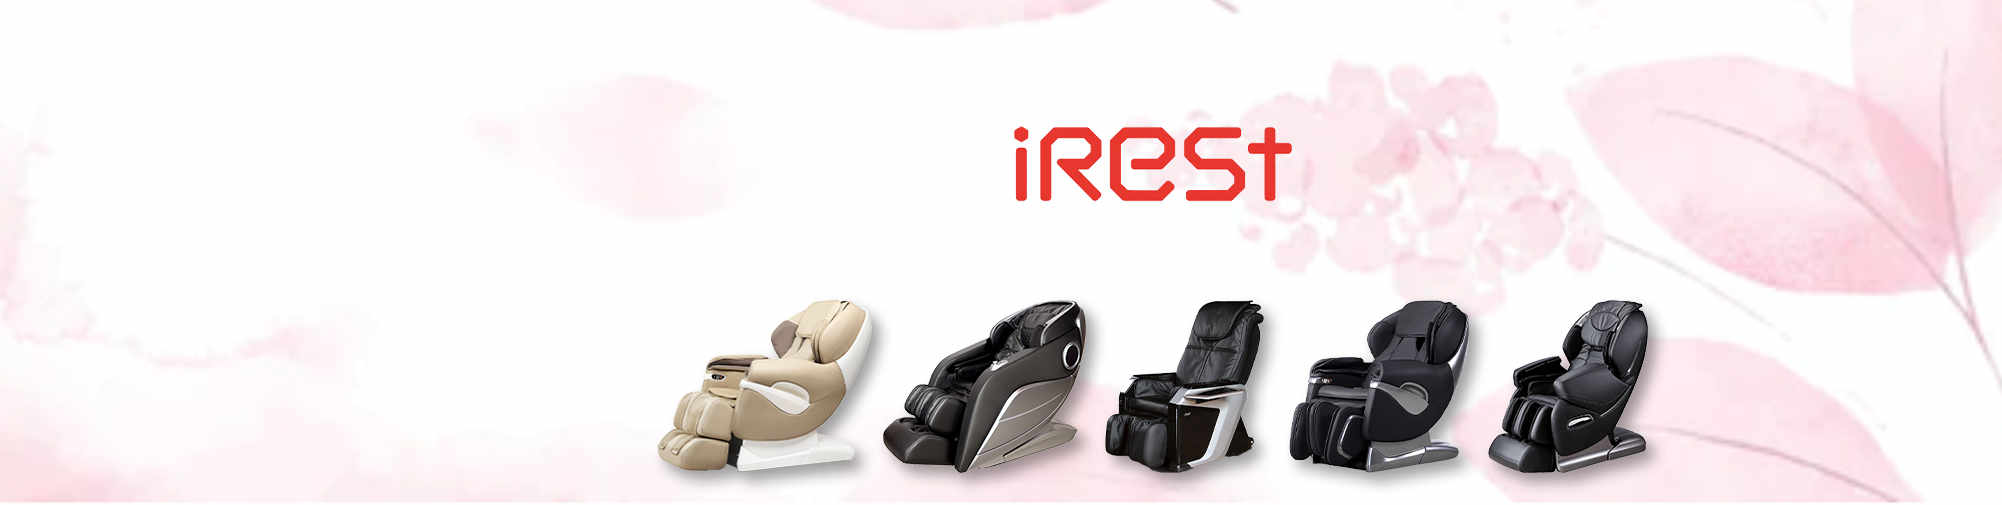 iRest: un soplo de aire fresco para el mercado de los sillones de masaje | Massagesessel Welt